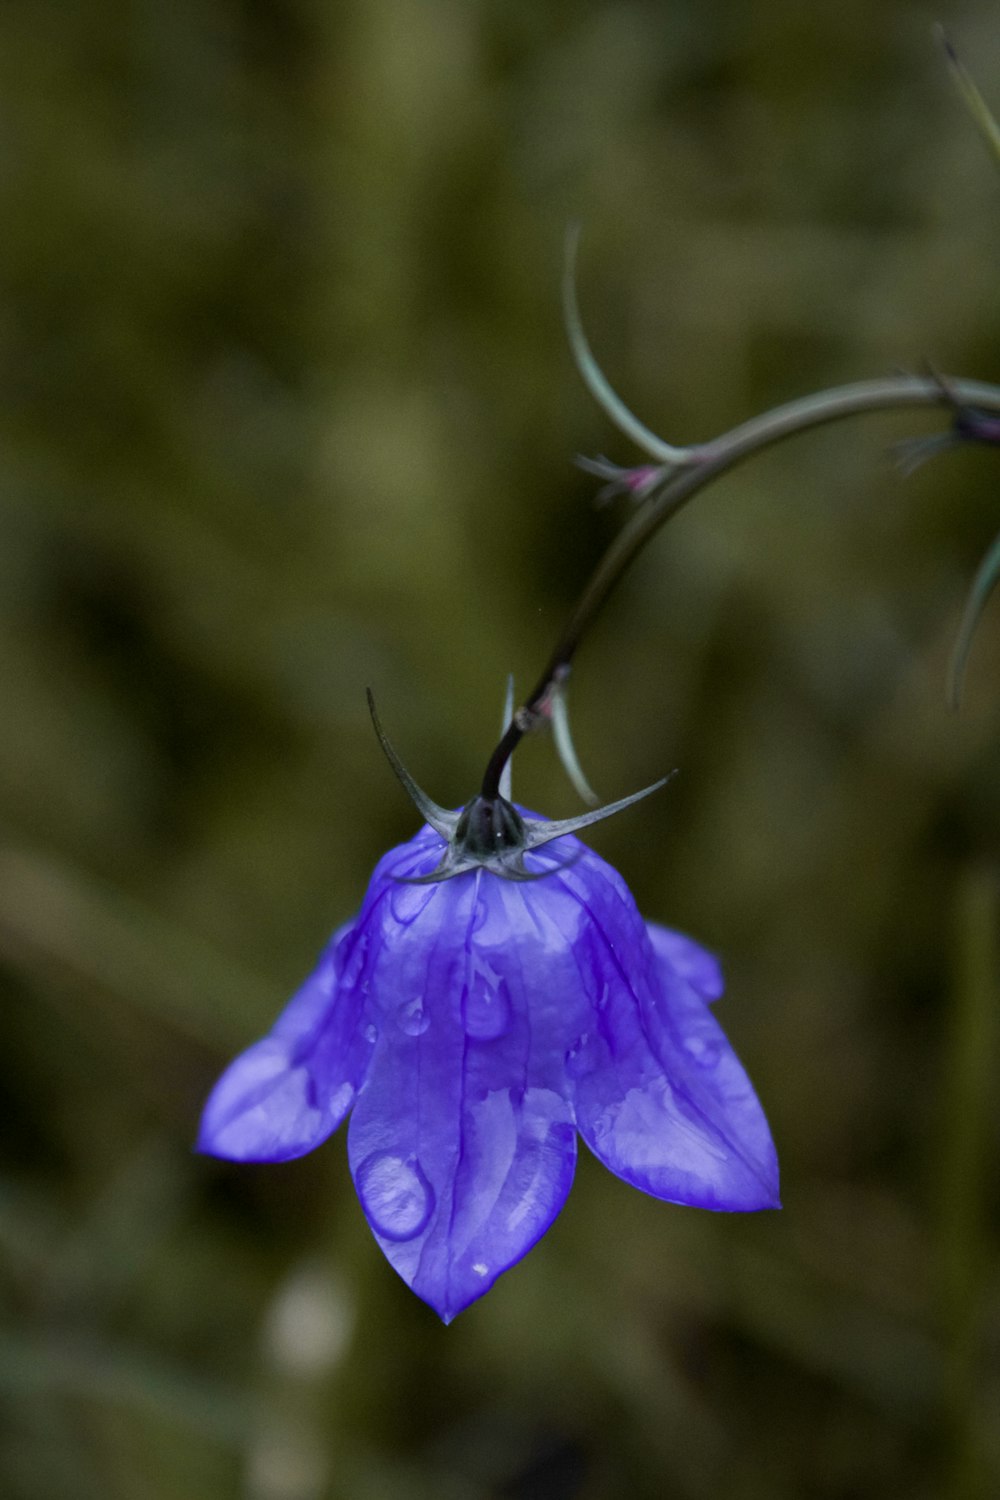 blue-petaled flower